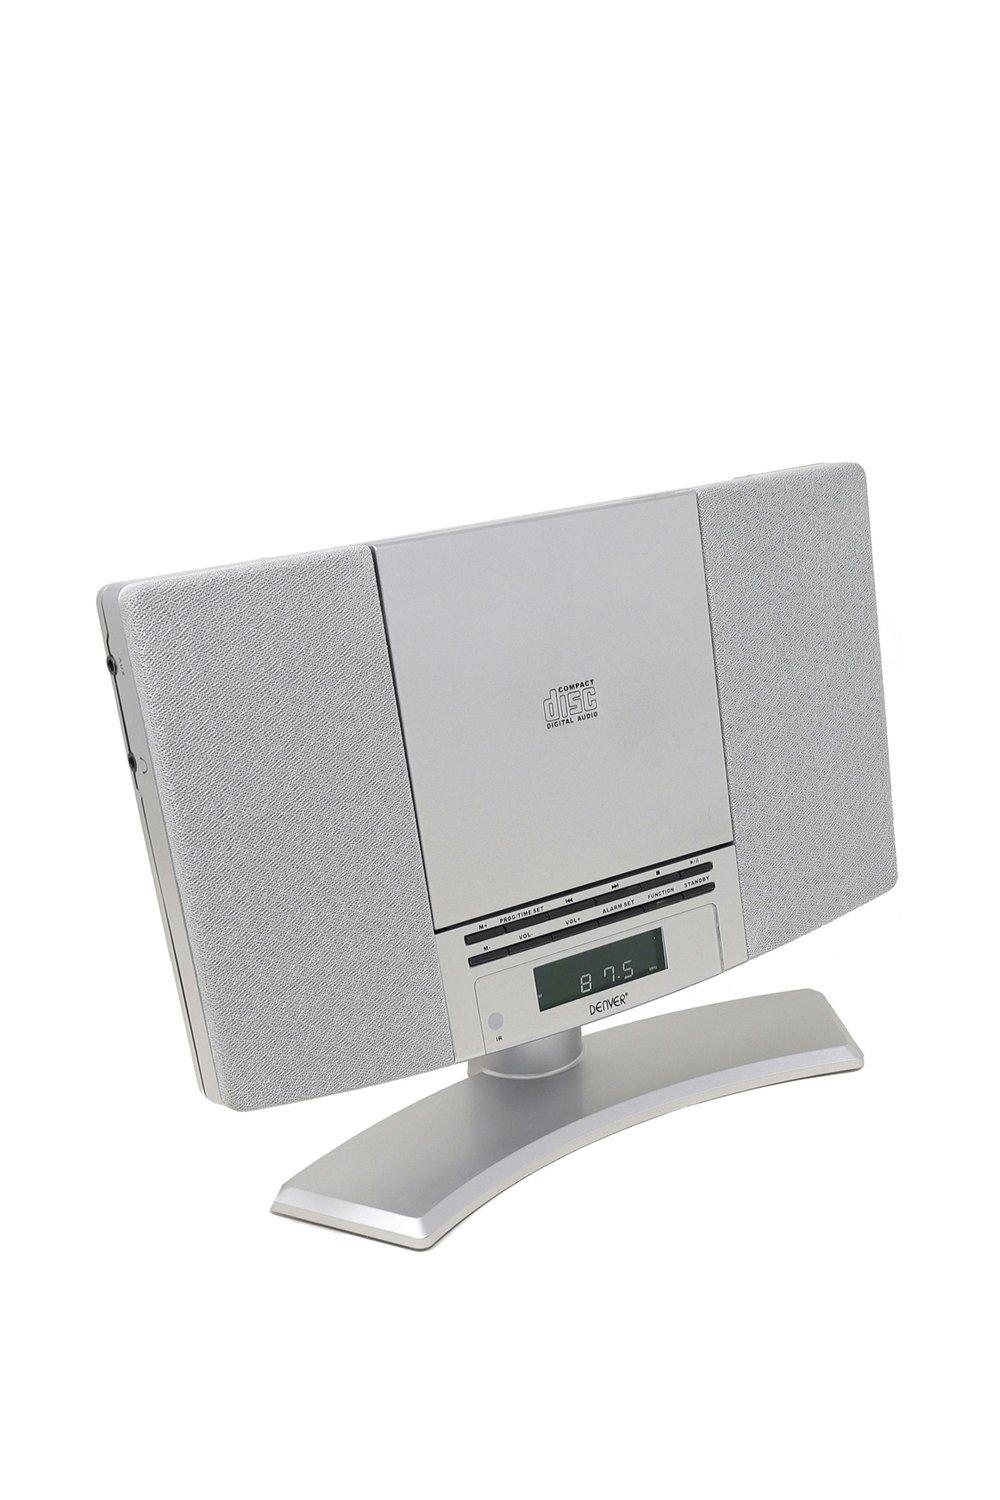 CD Player Wall Mountable with FM Radio & Clock Alarm